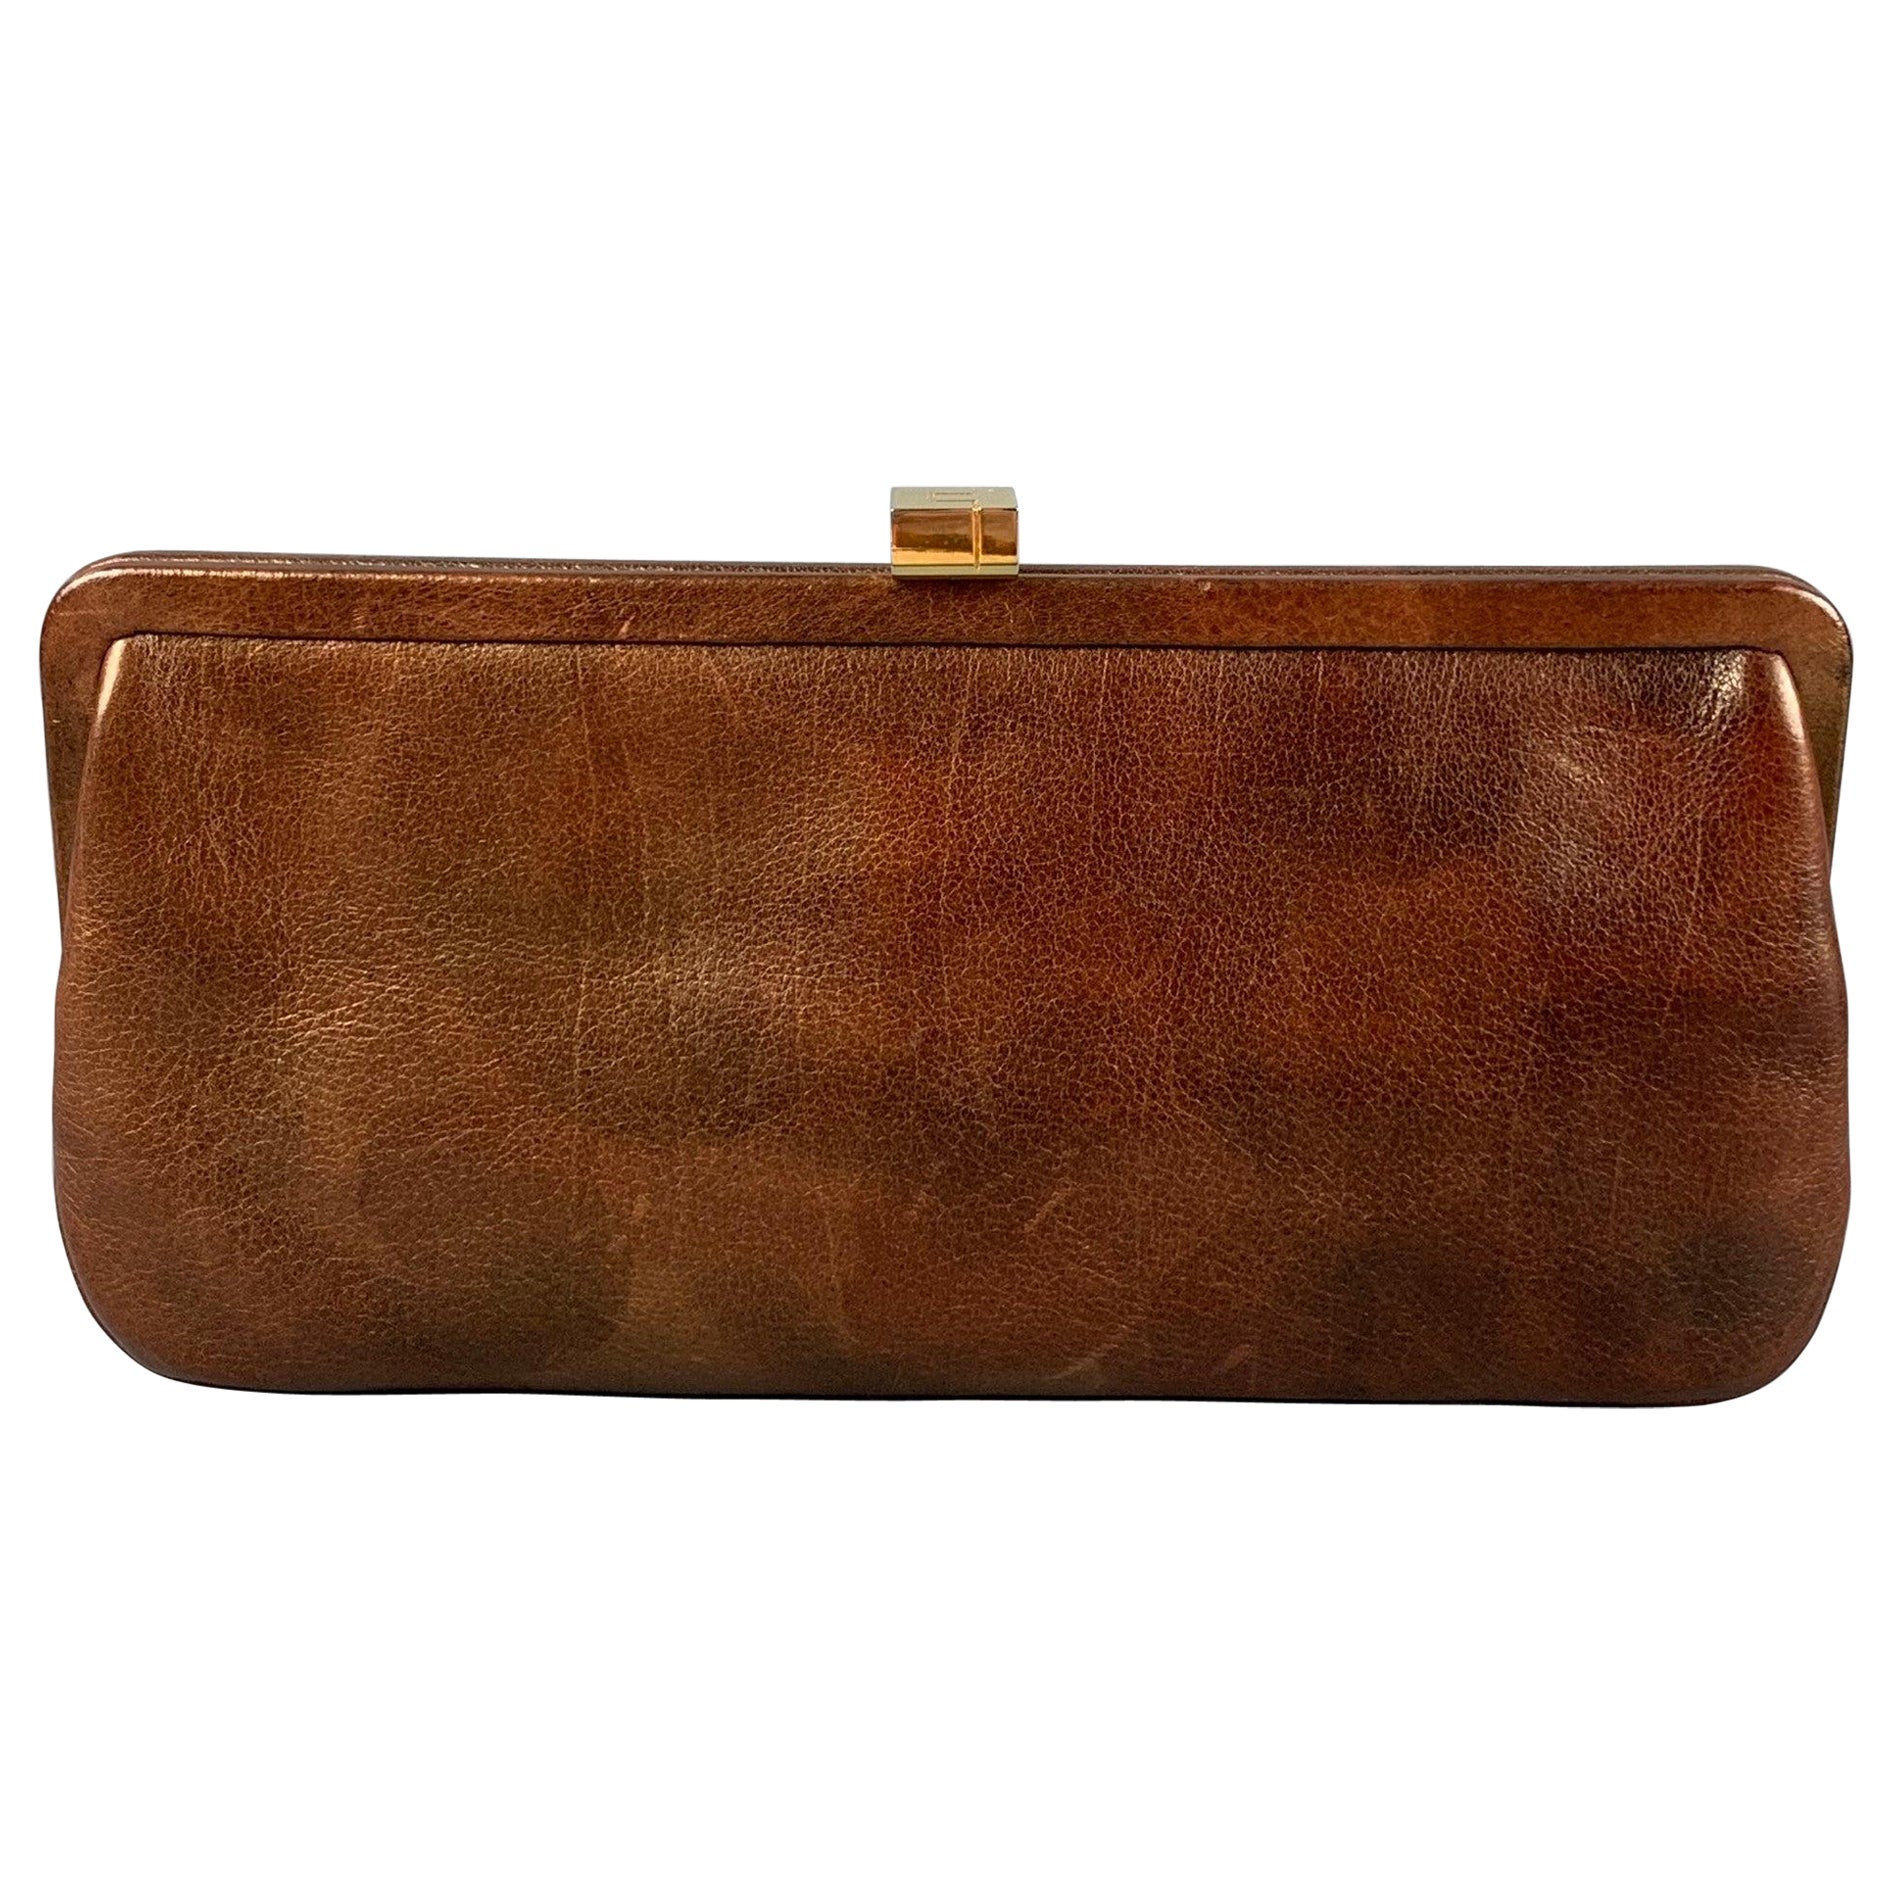 LAMBERTSON TRUEX Brown Leather Clutch Handbag For Sale